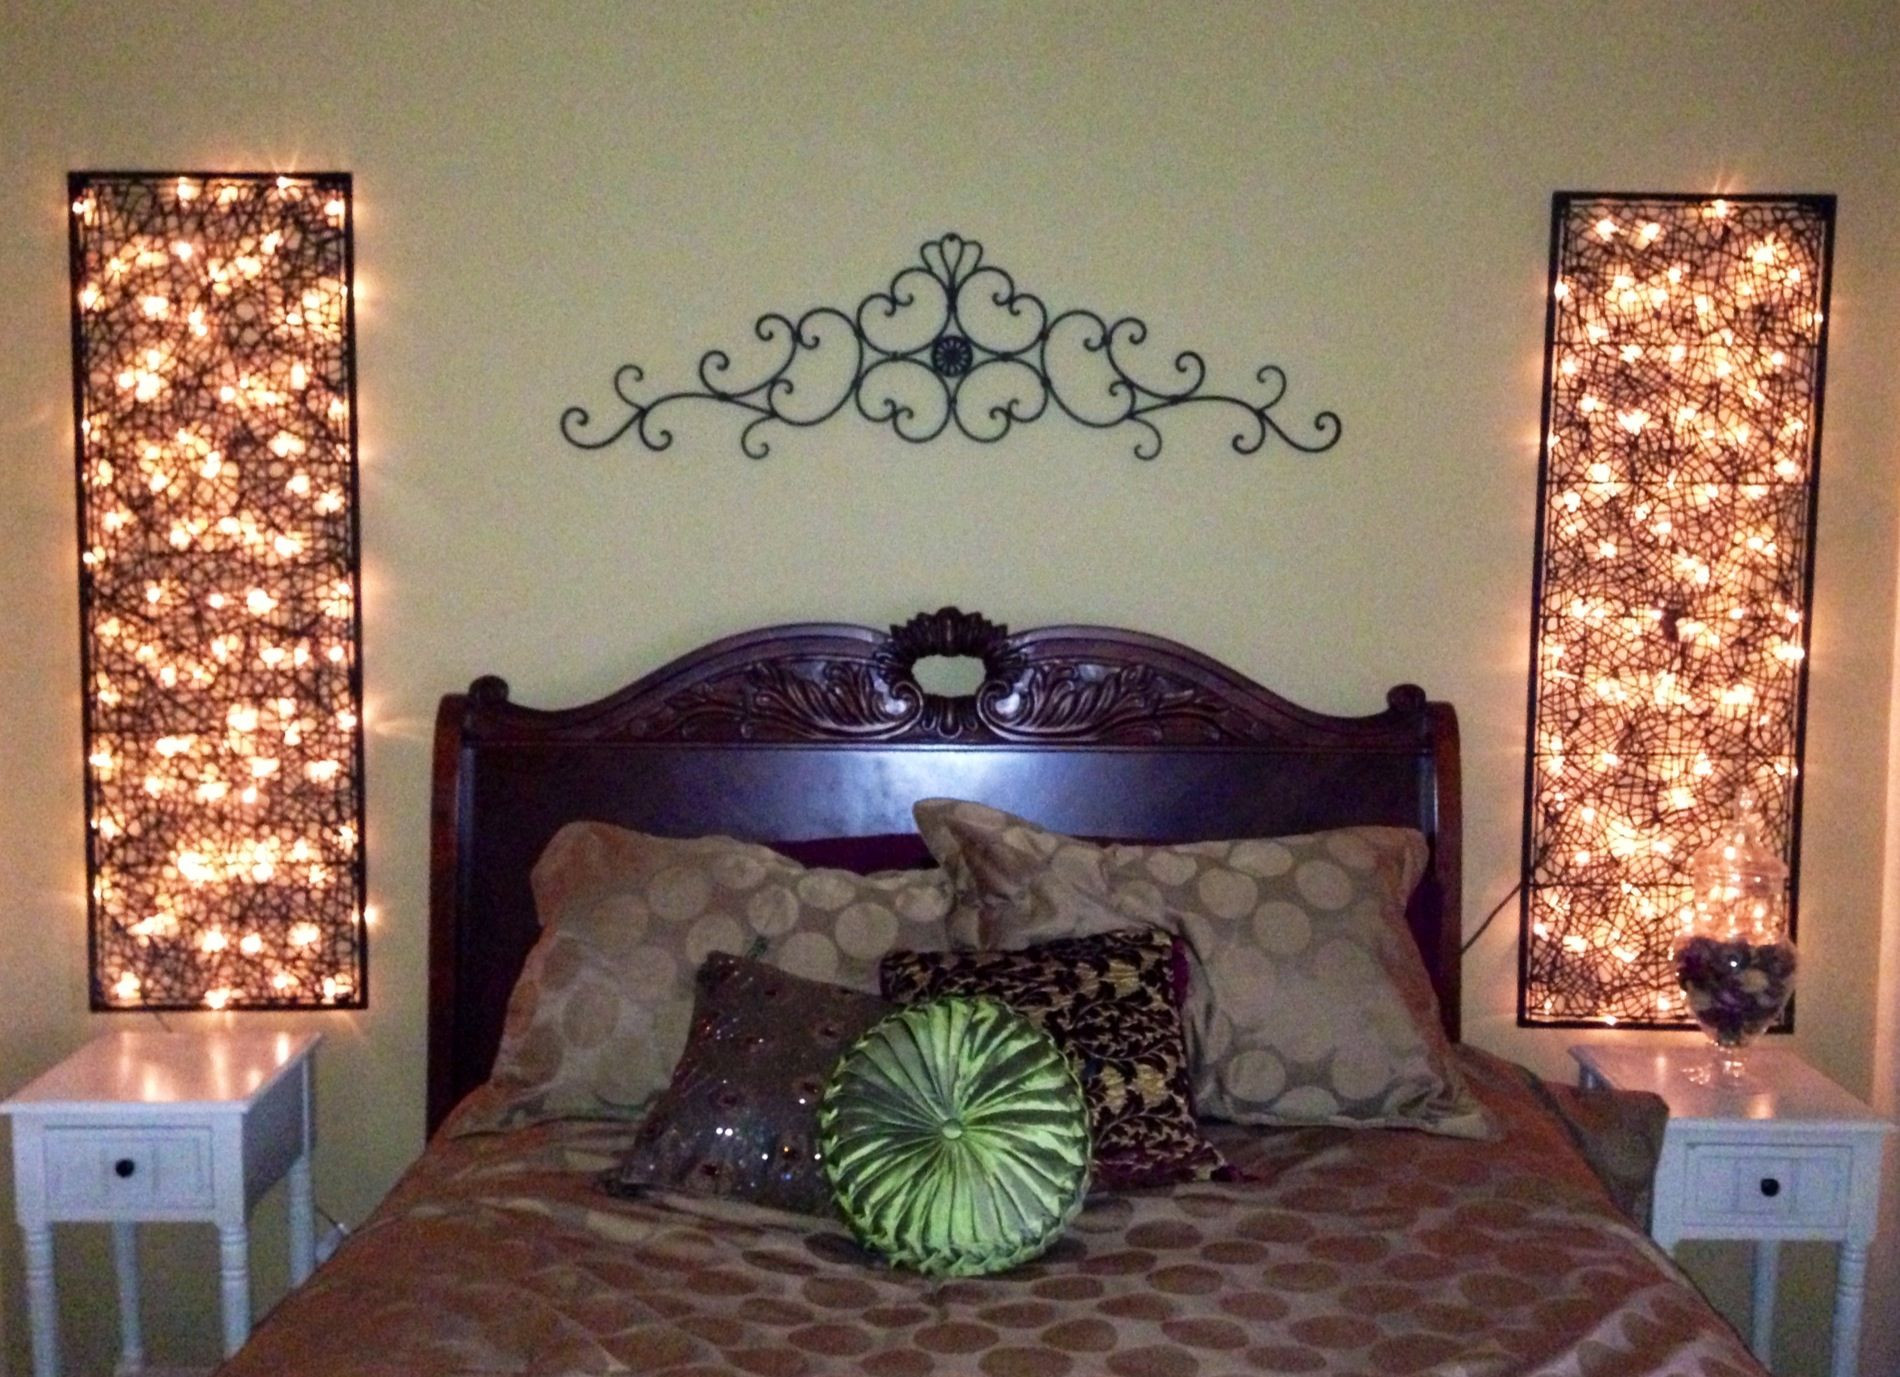 Bedroom Wall Decor Pinterest
 DIY home decor bedroom lights